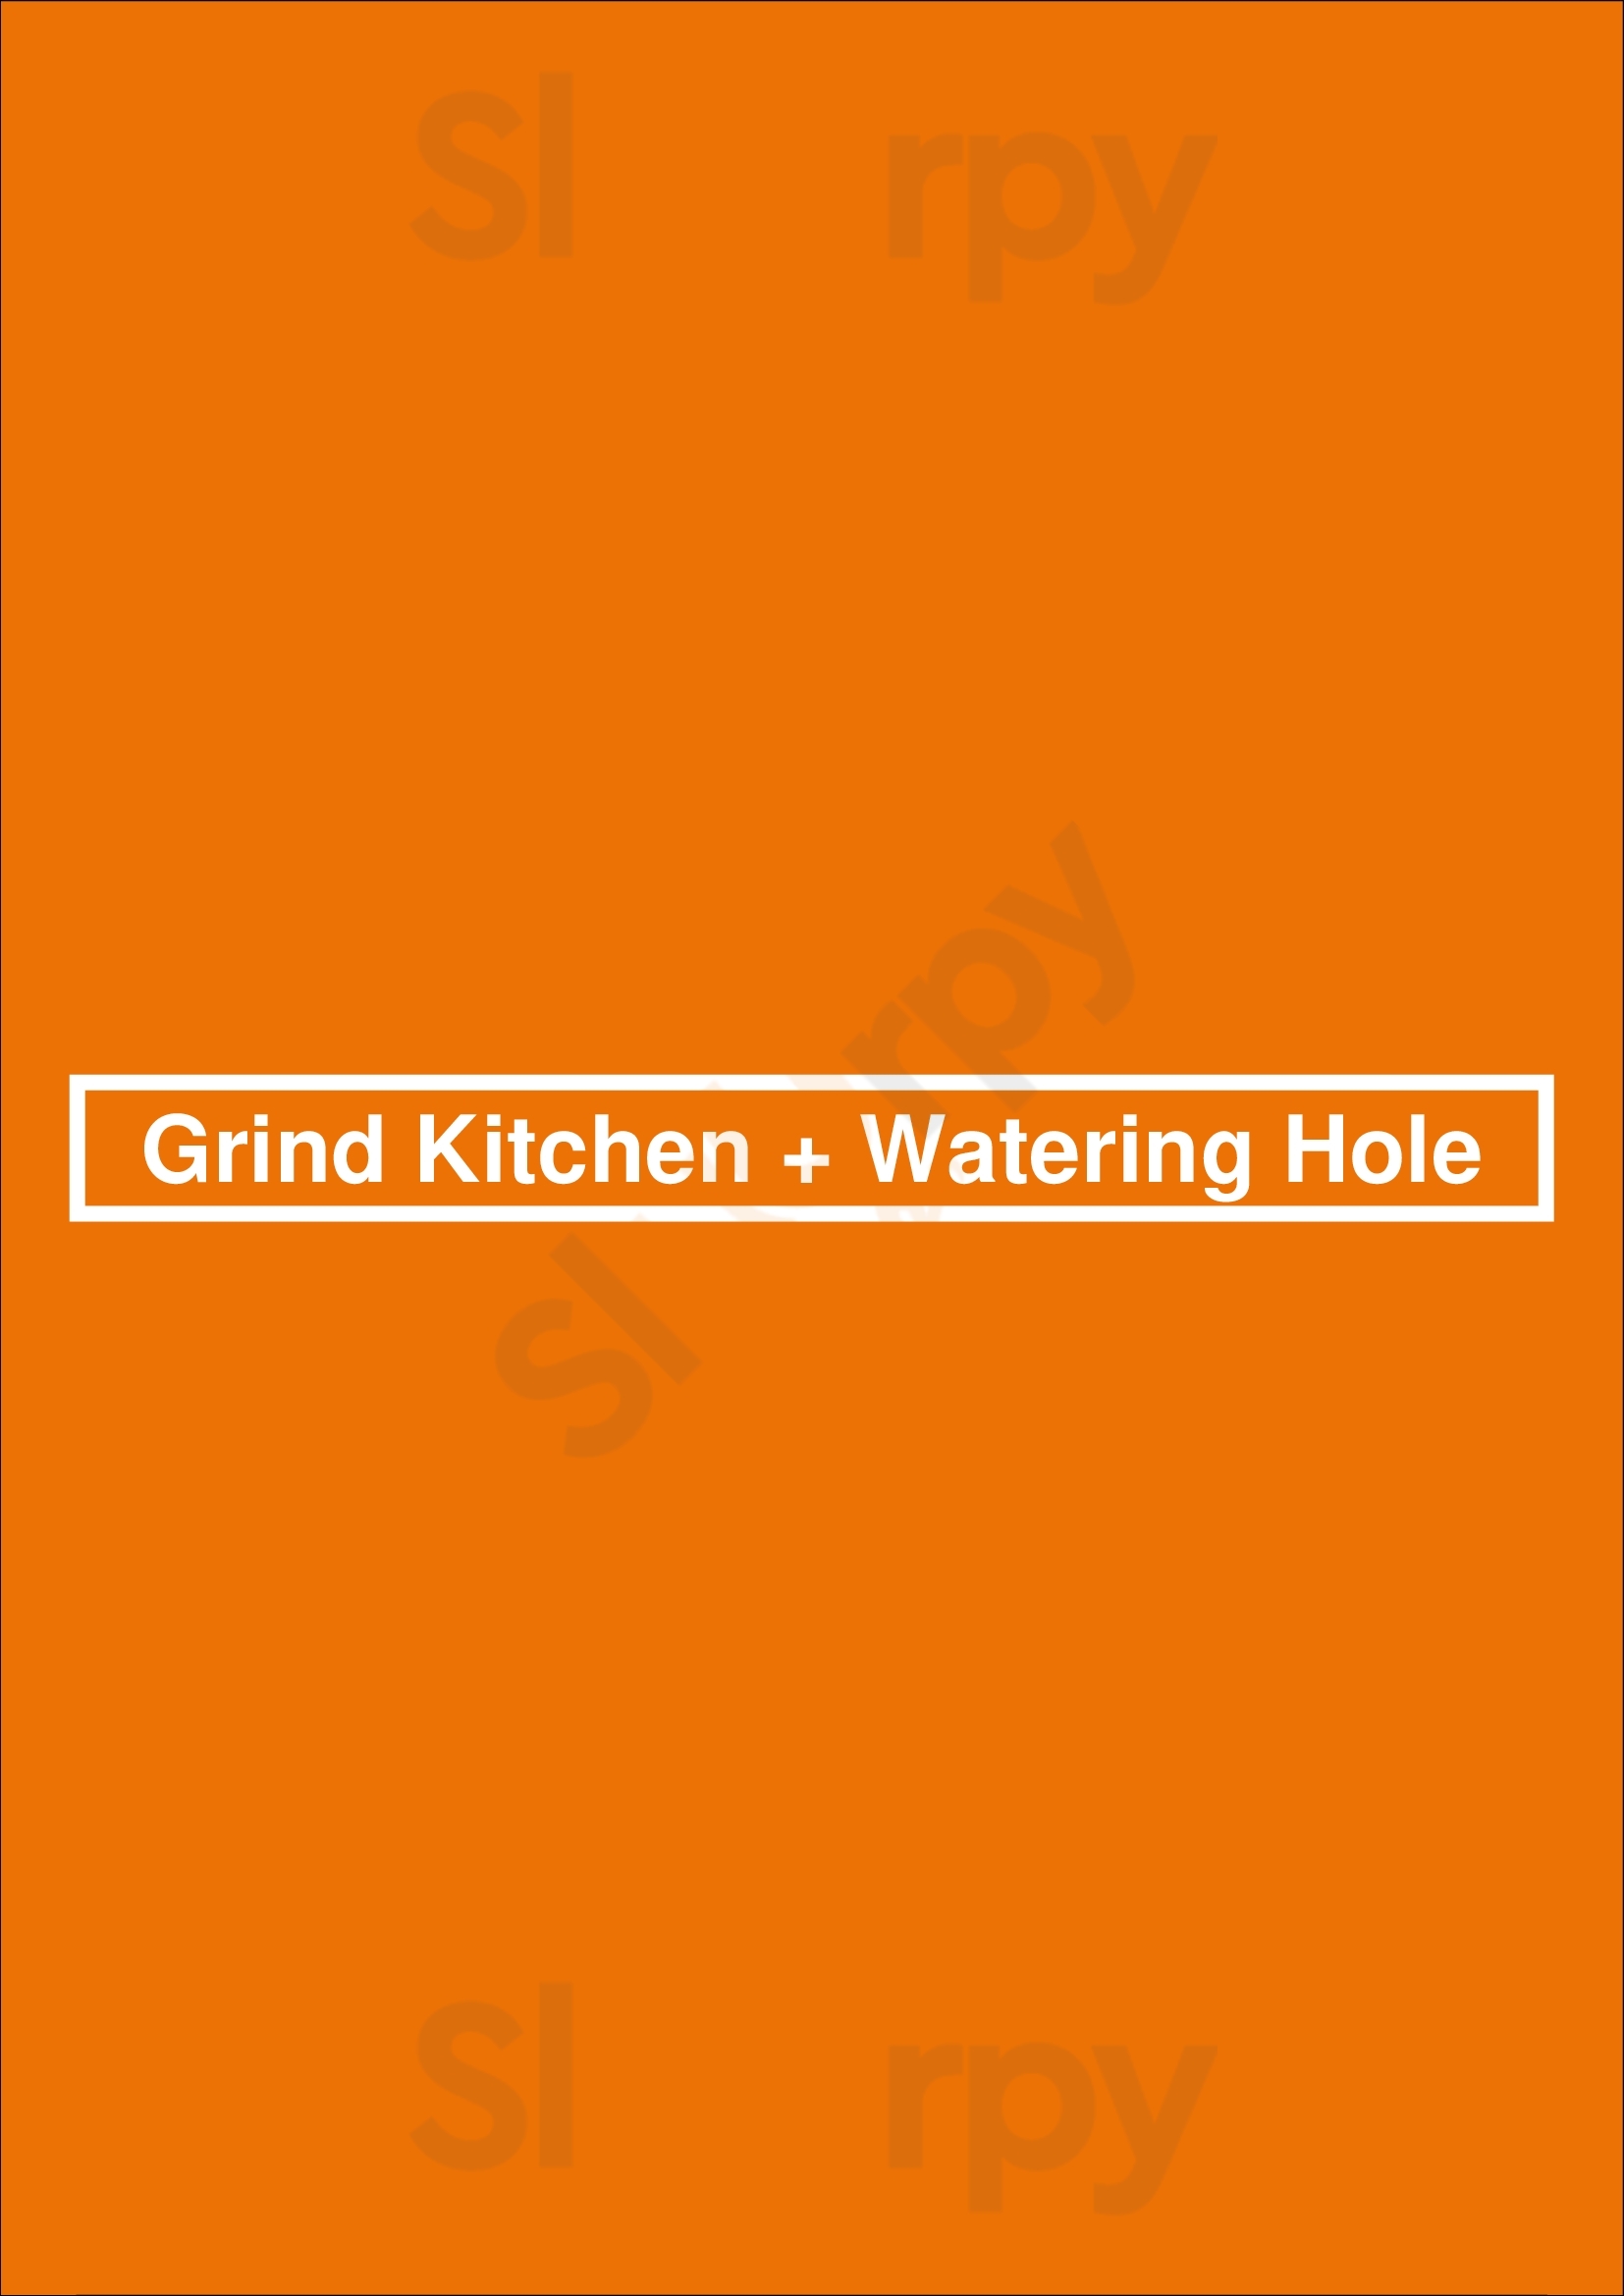 Grind Kitchen + Watering Hole Denver Menu - 1